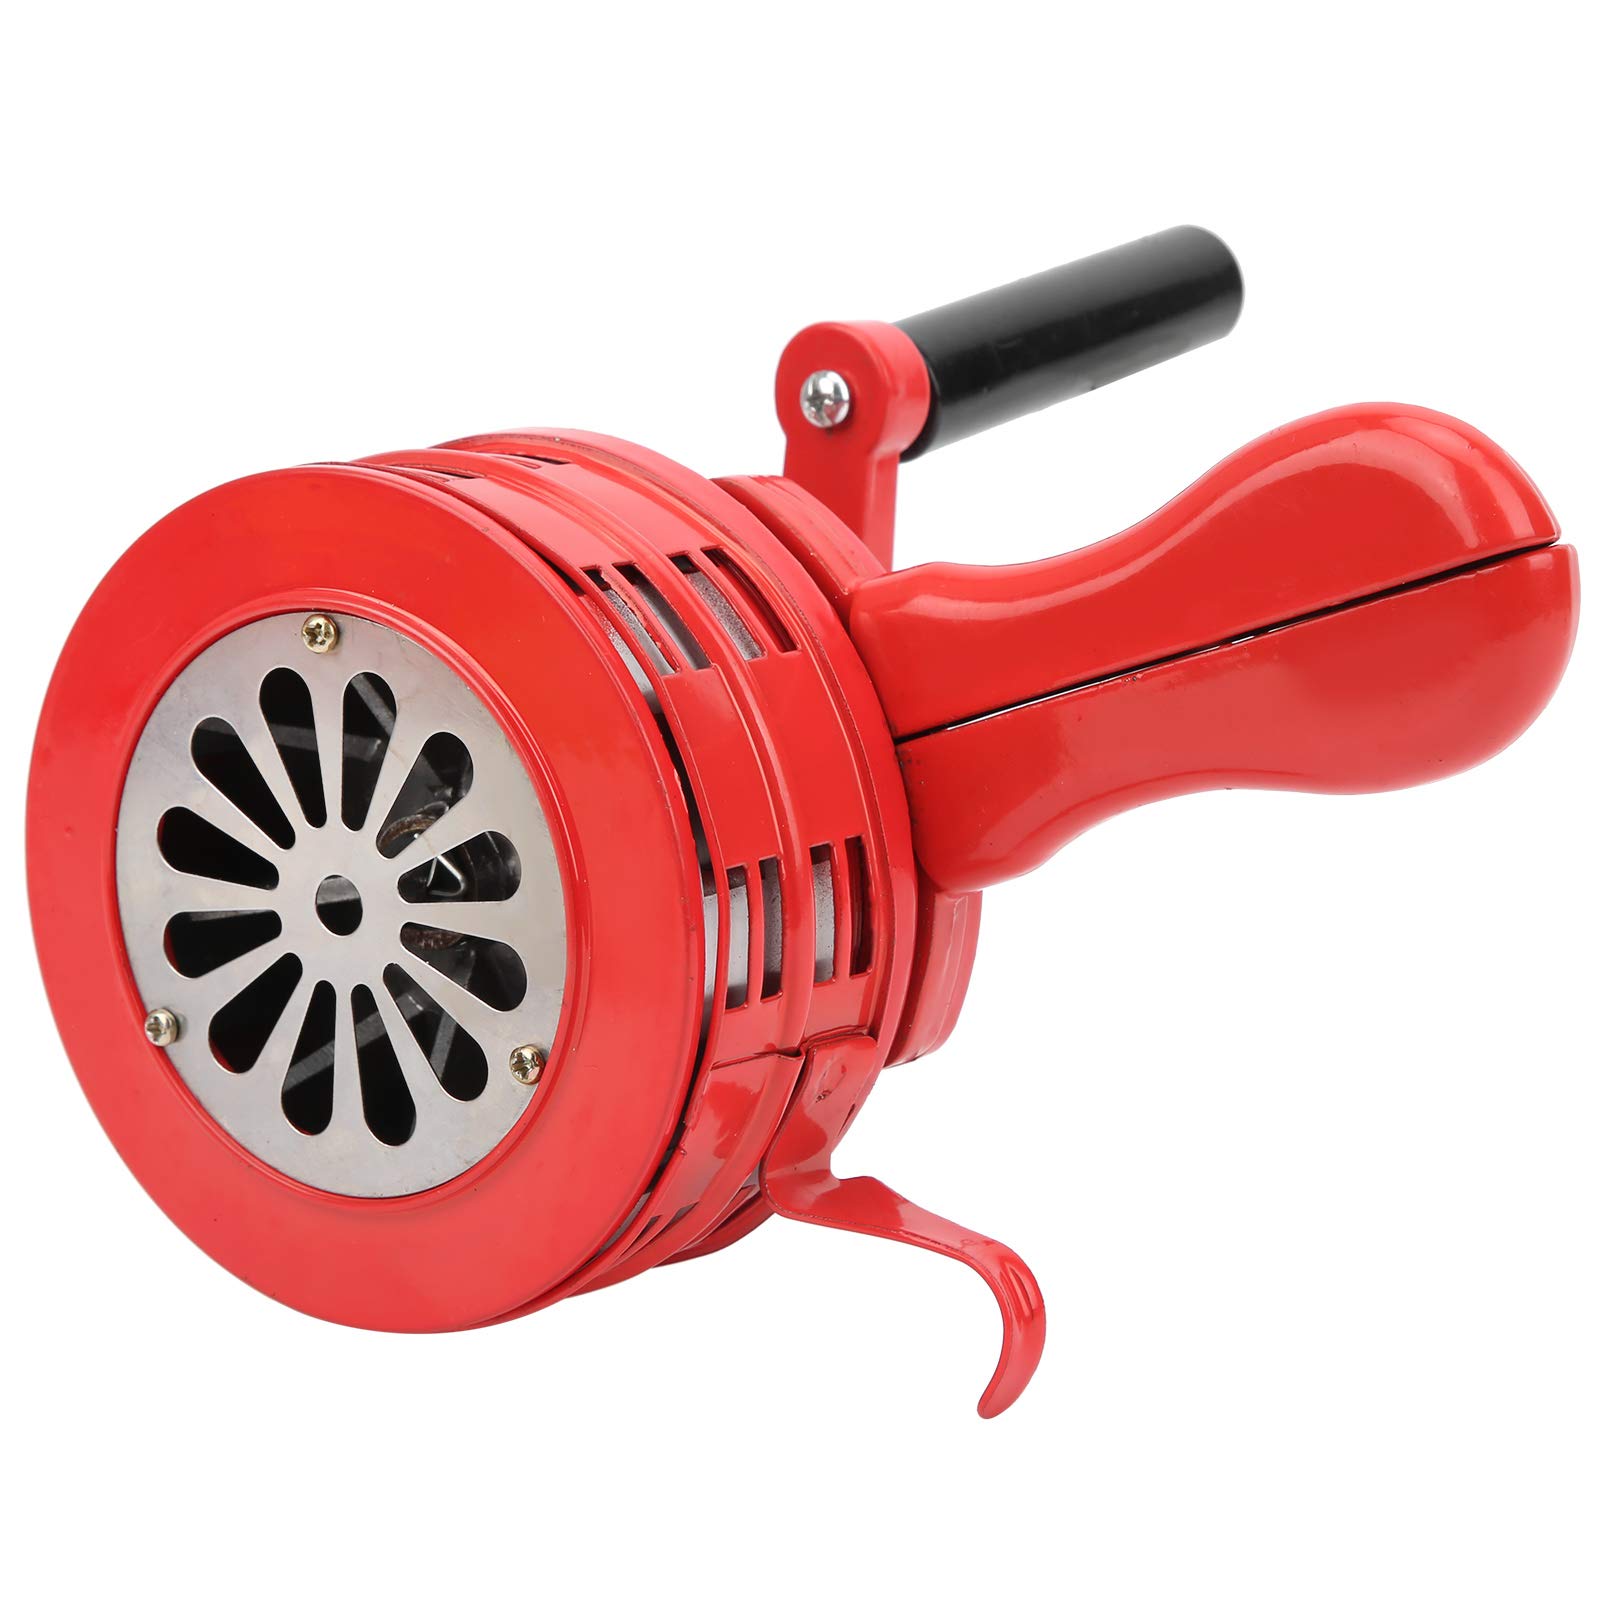 Deror Handkurbelsirene Rot Tragbarer manueller Alarm für Schultruppen Alarmierung 120DB ca. 11 cm/4,3 Zoll